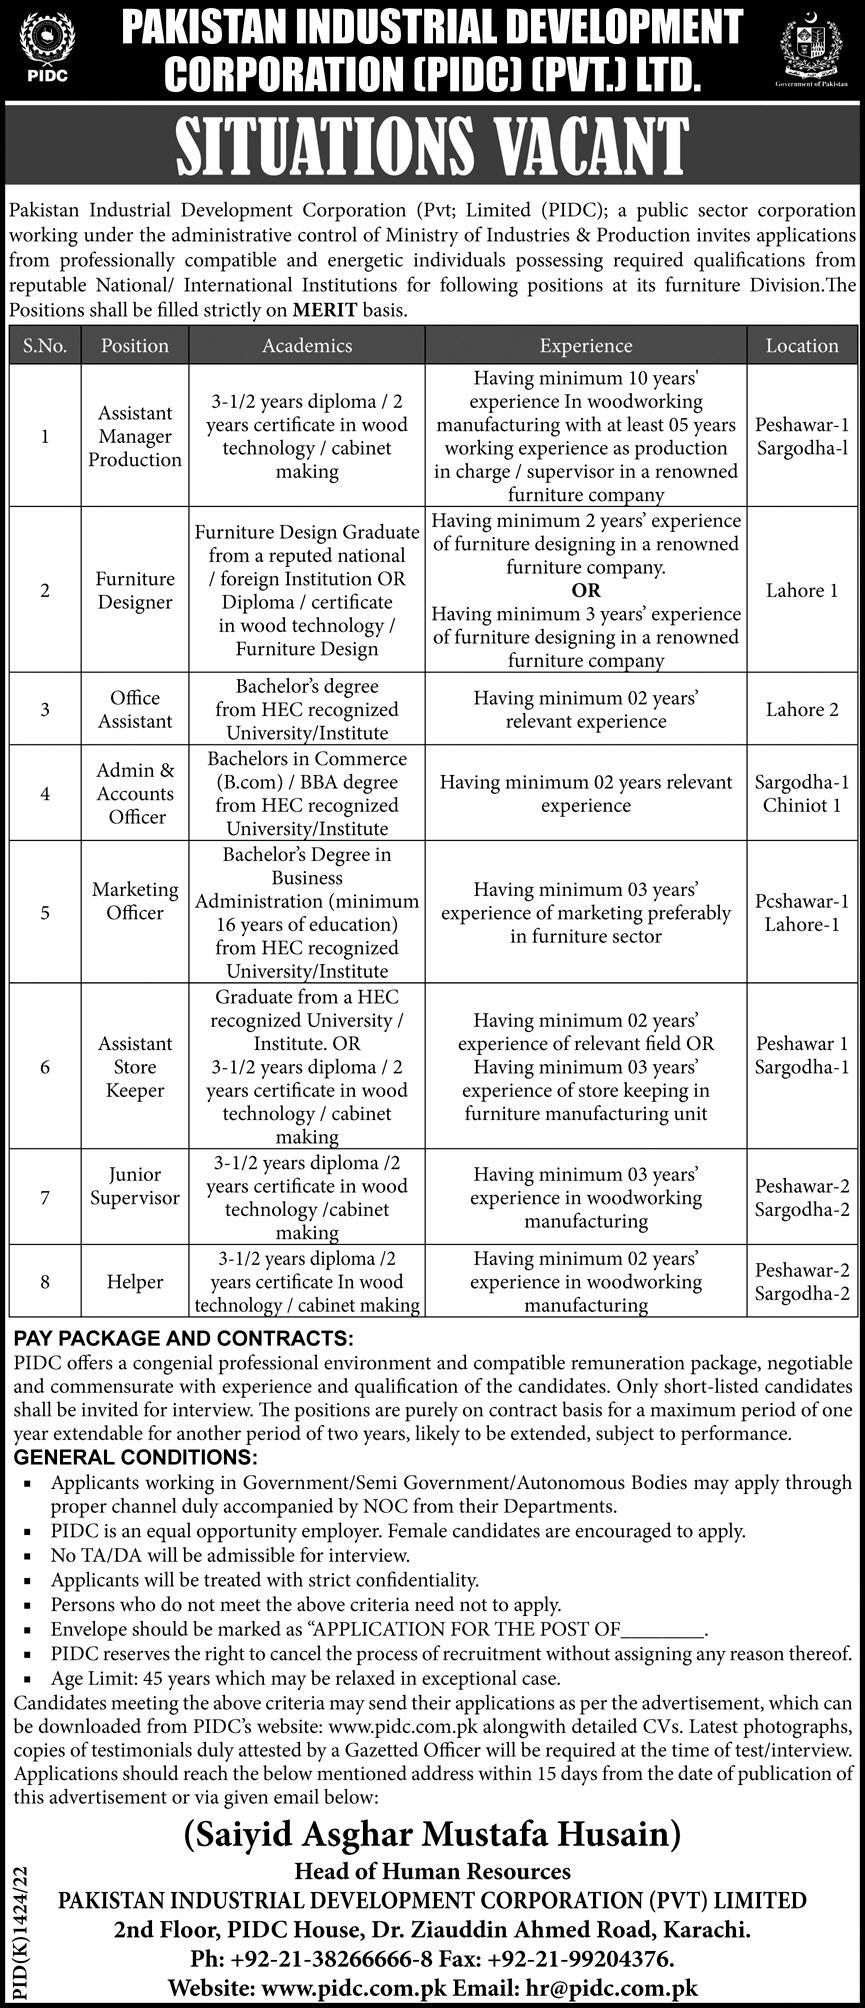 Pakistan Industrial Development Corporation (PIDC) Jobs 2022